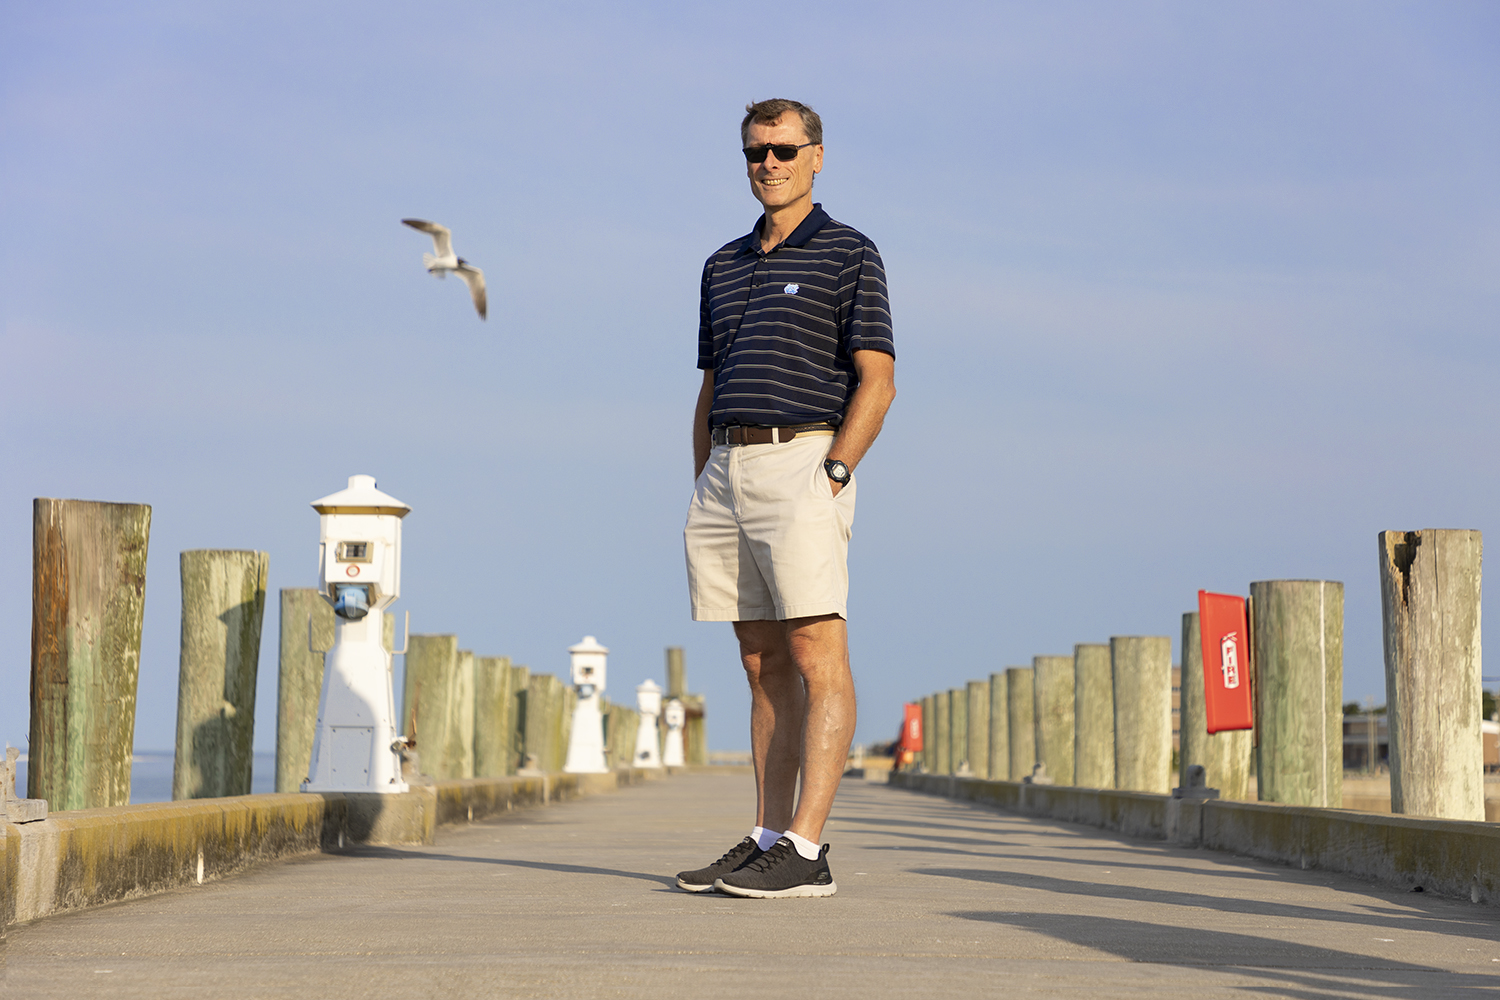 Rick Luettich stands on a boardwalk.